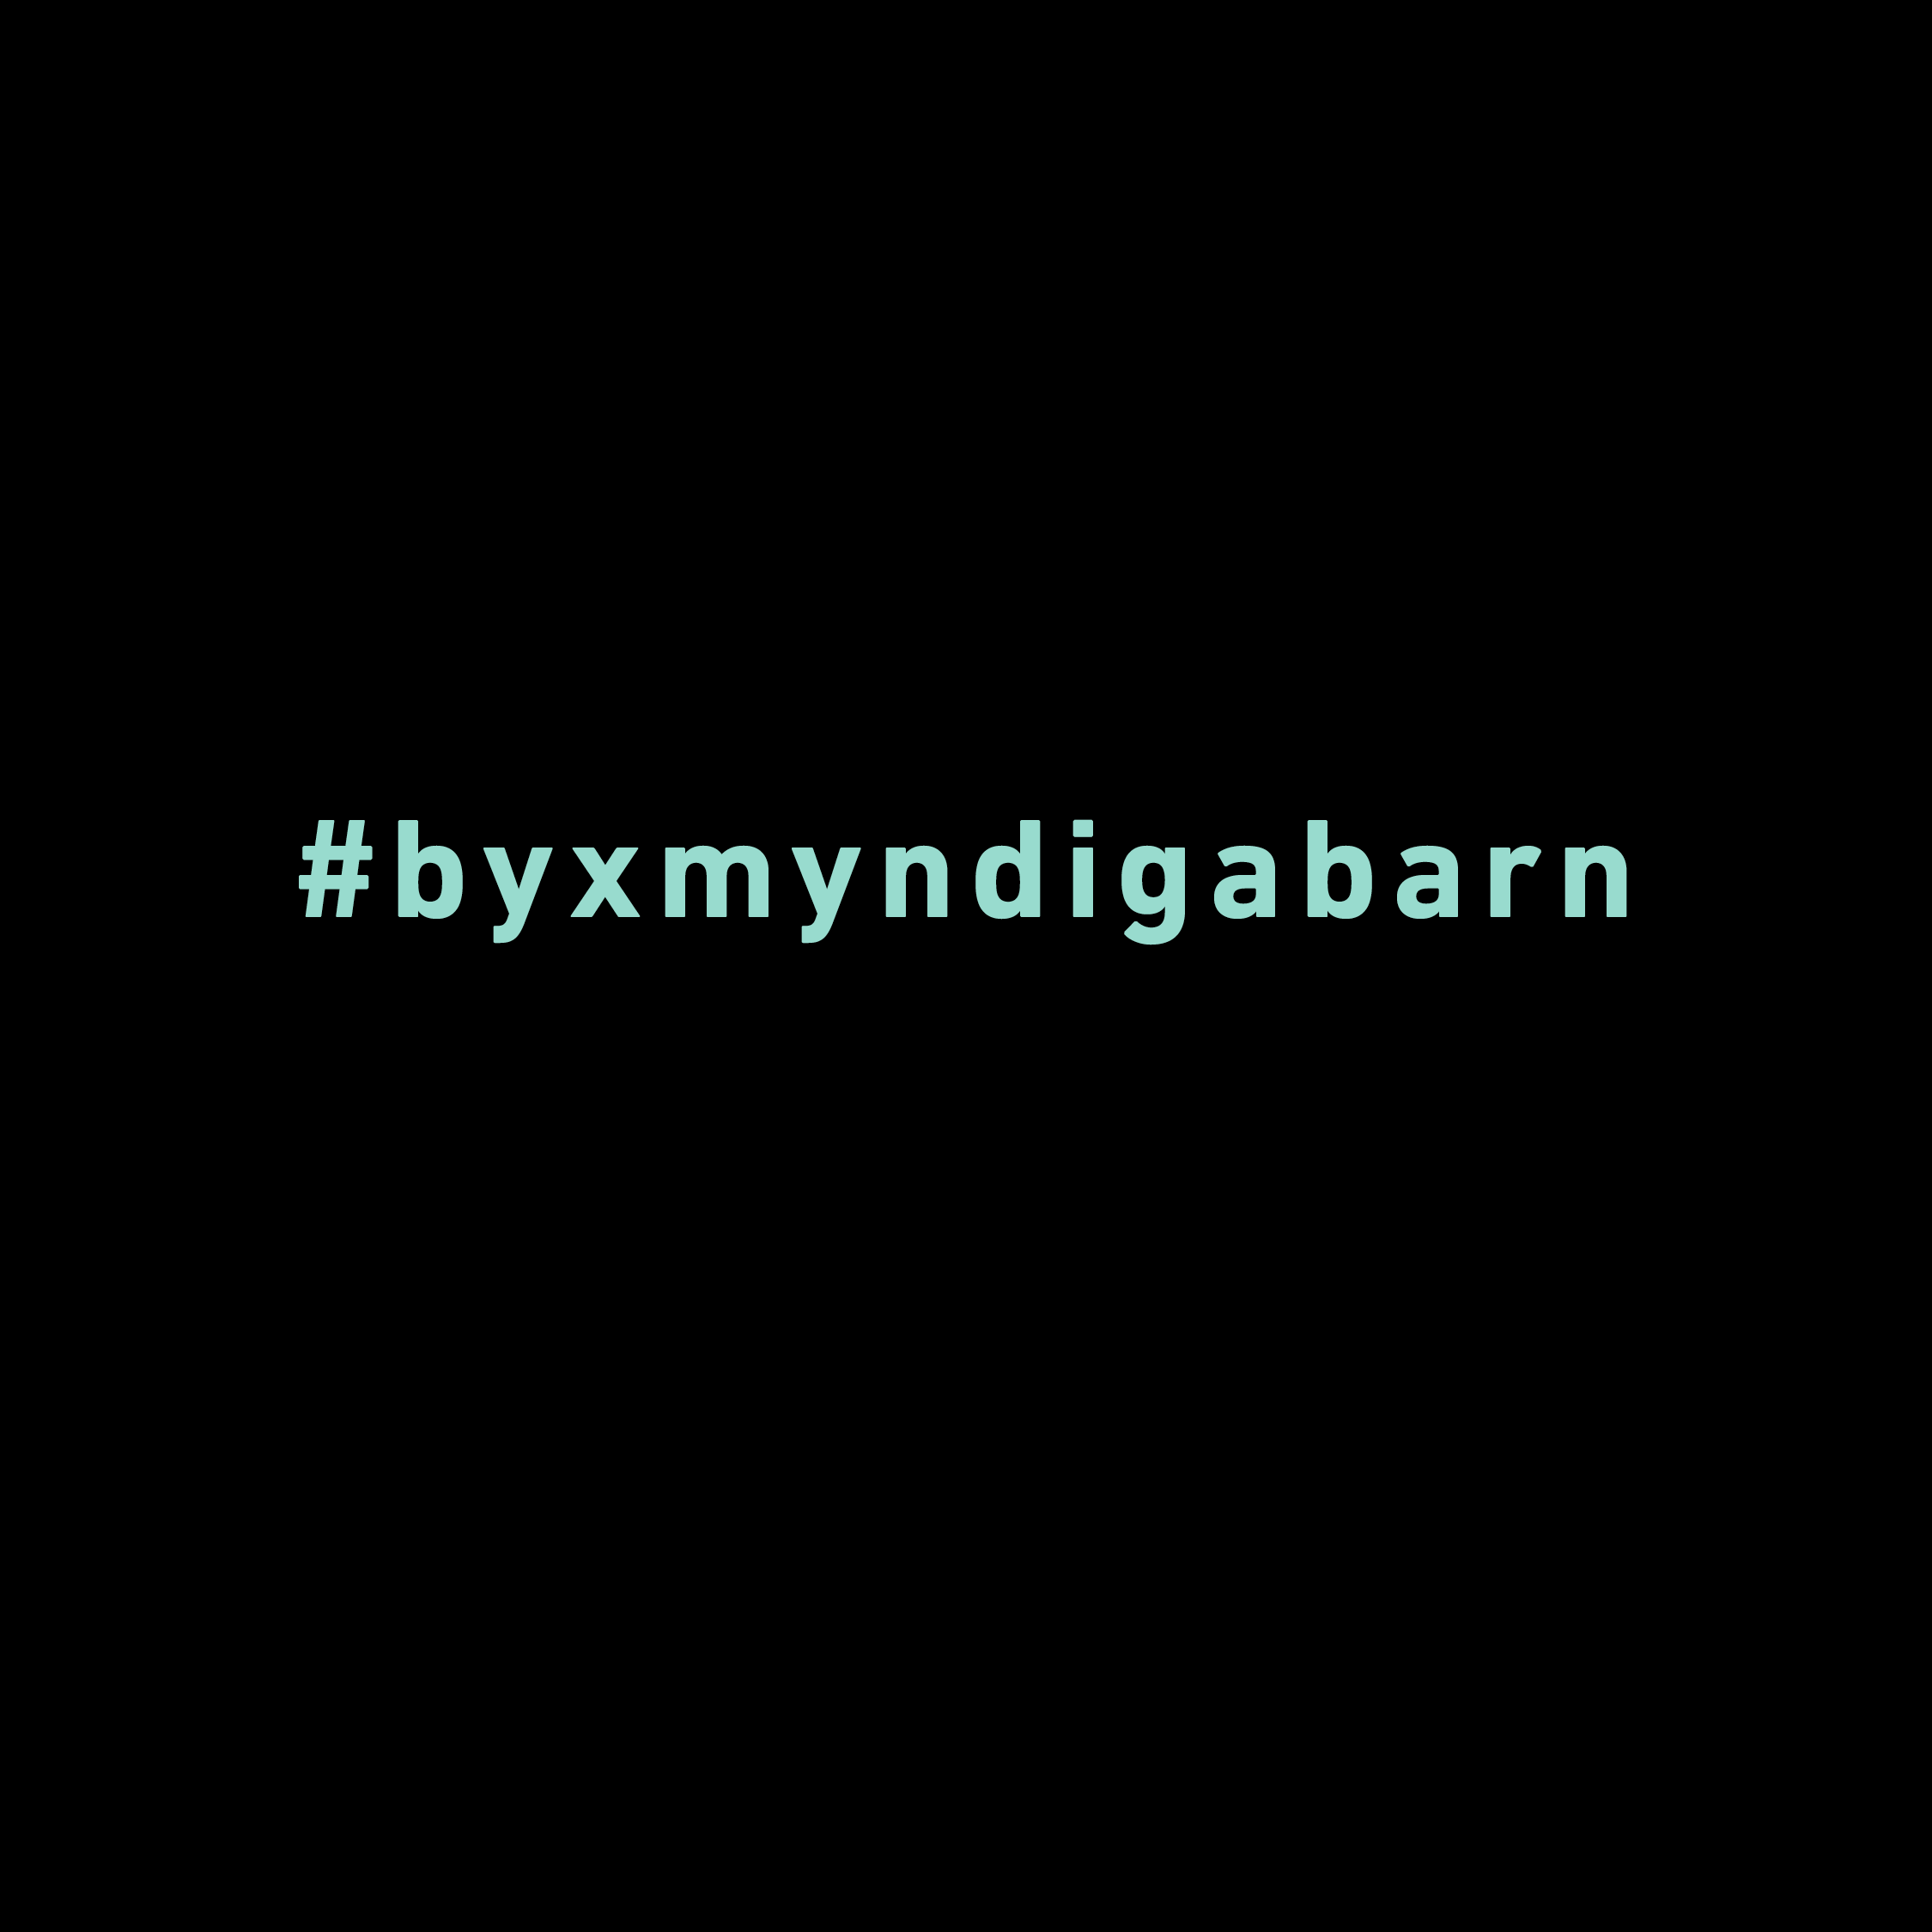 Hashtag #byxmyndiga skriven i grönturkost mot svart bakgrund.